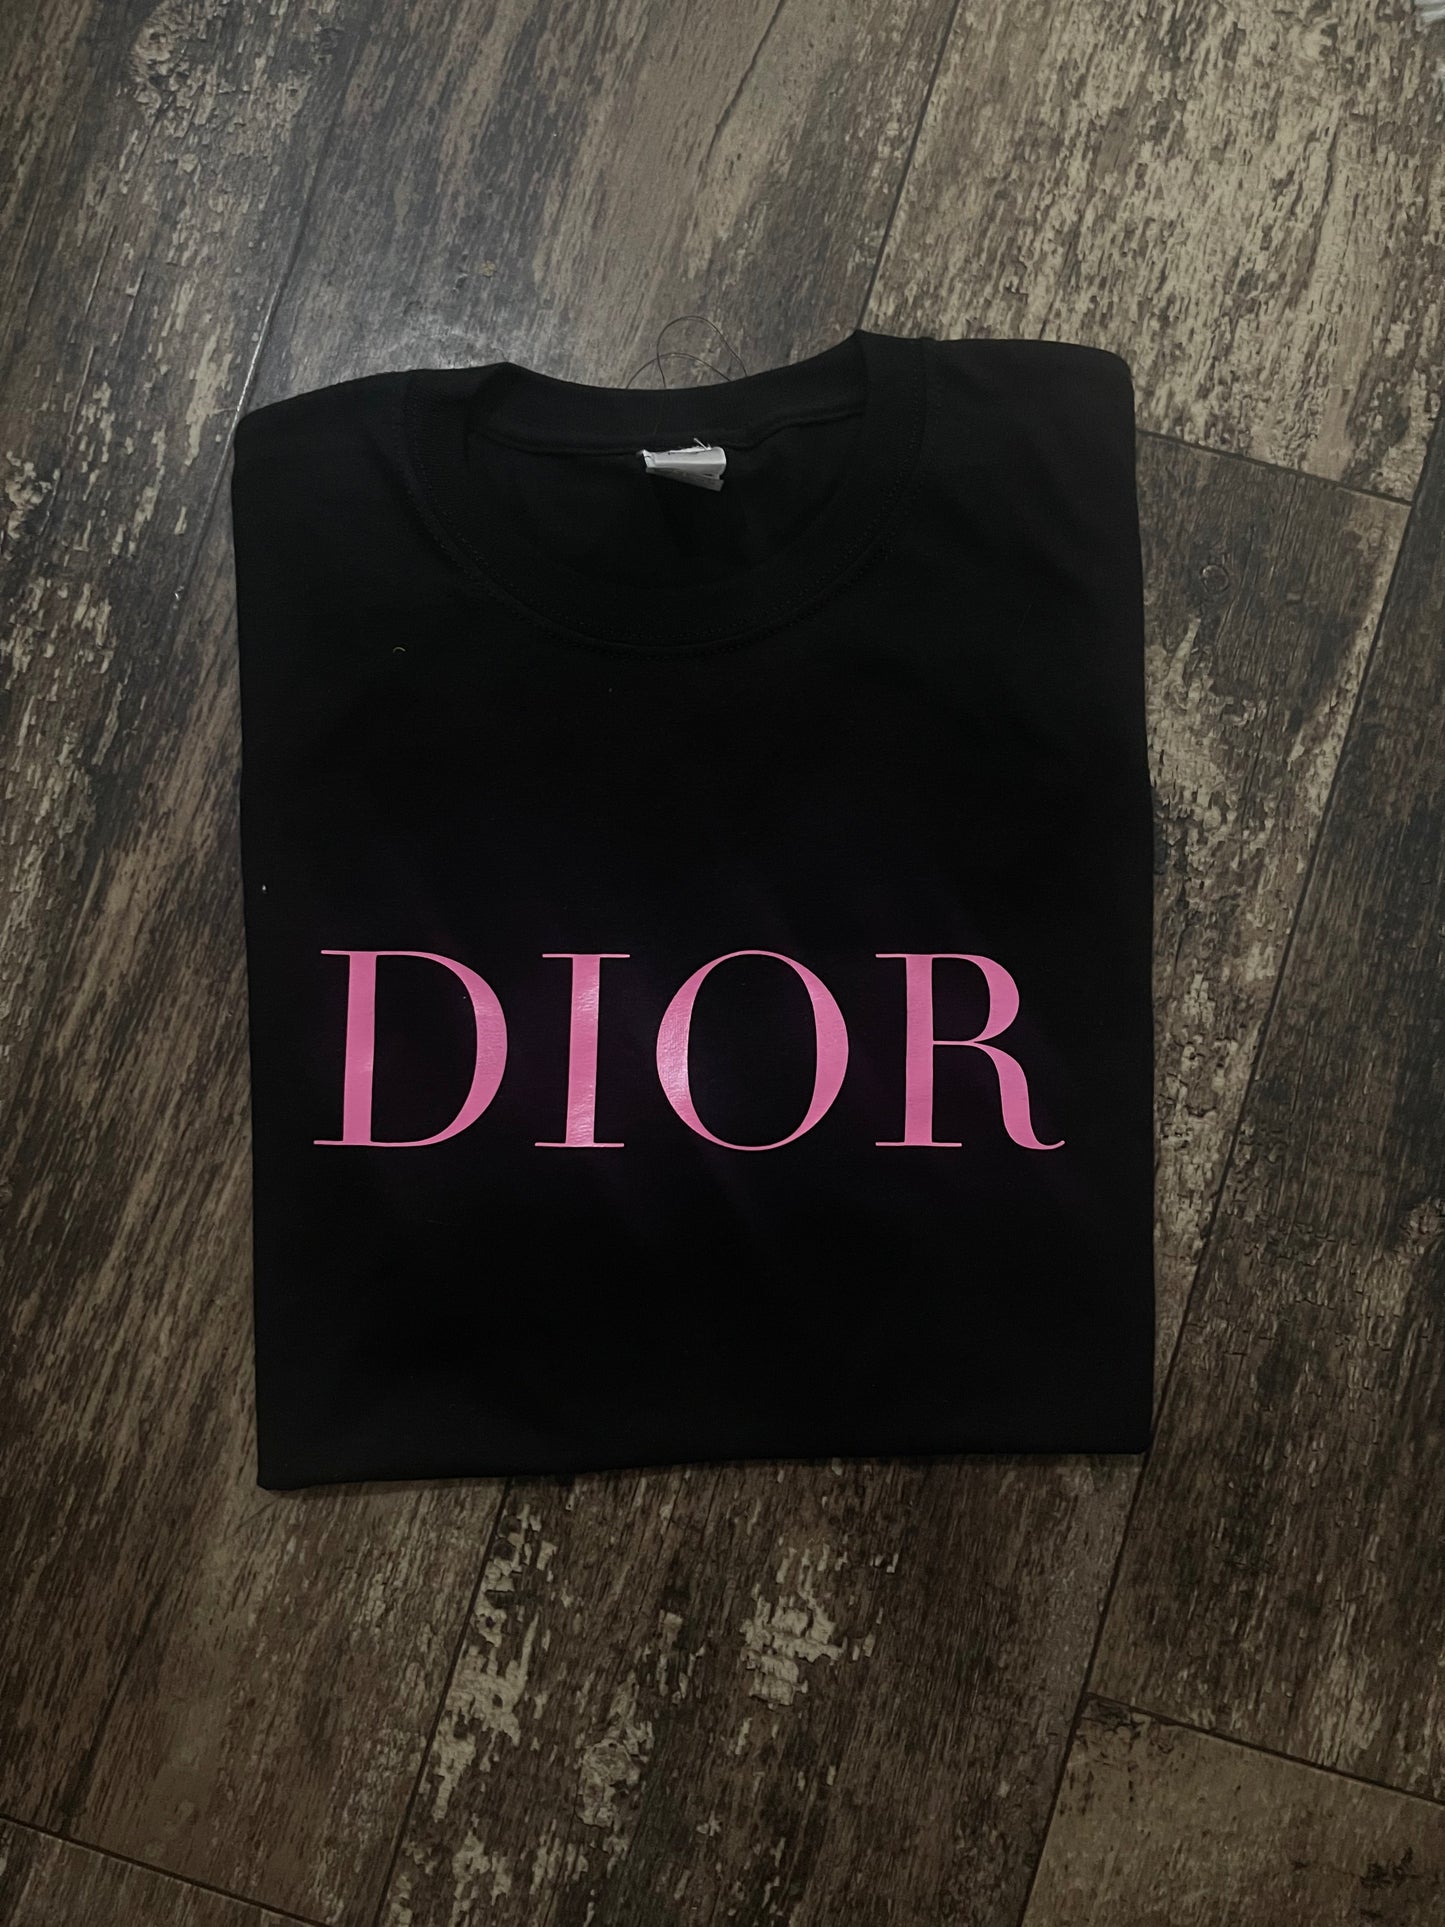 Designer inspired Dior shirt